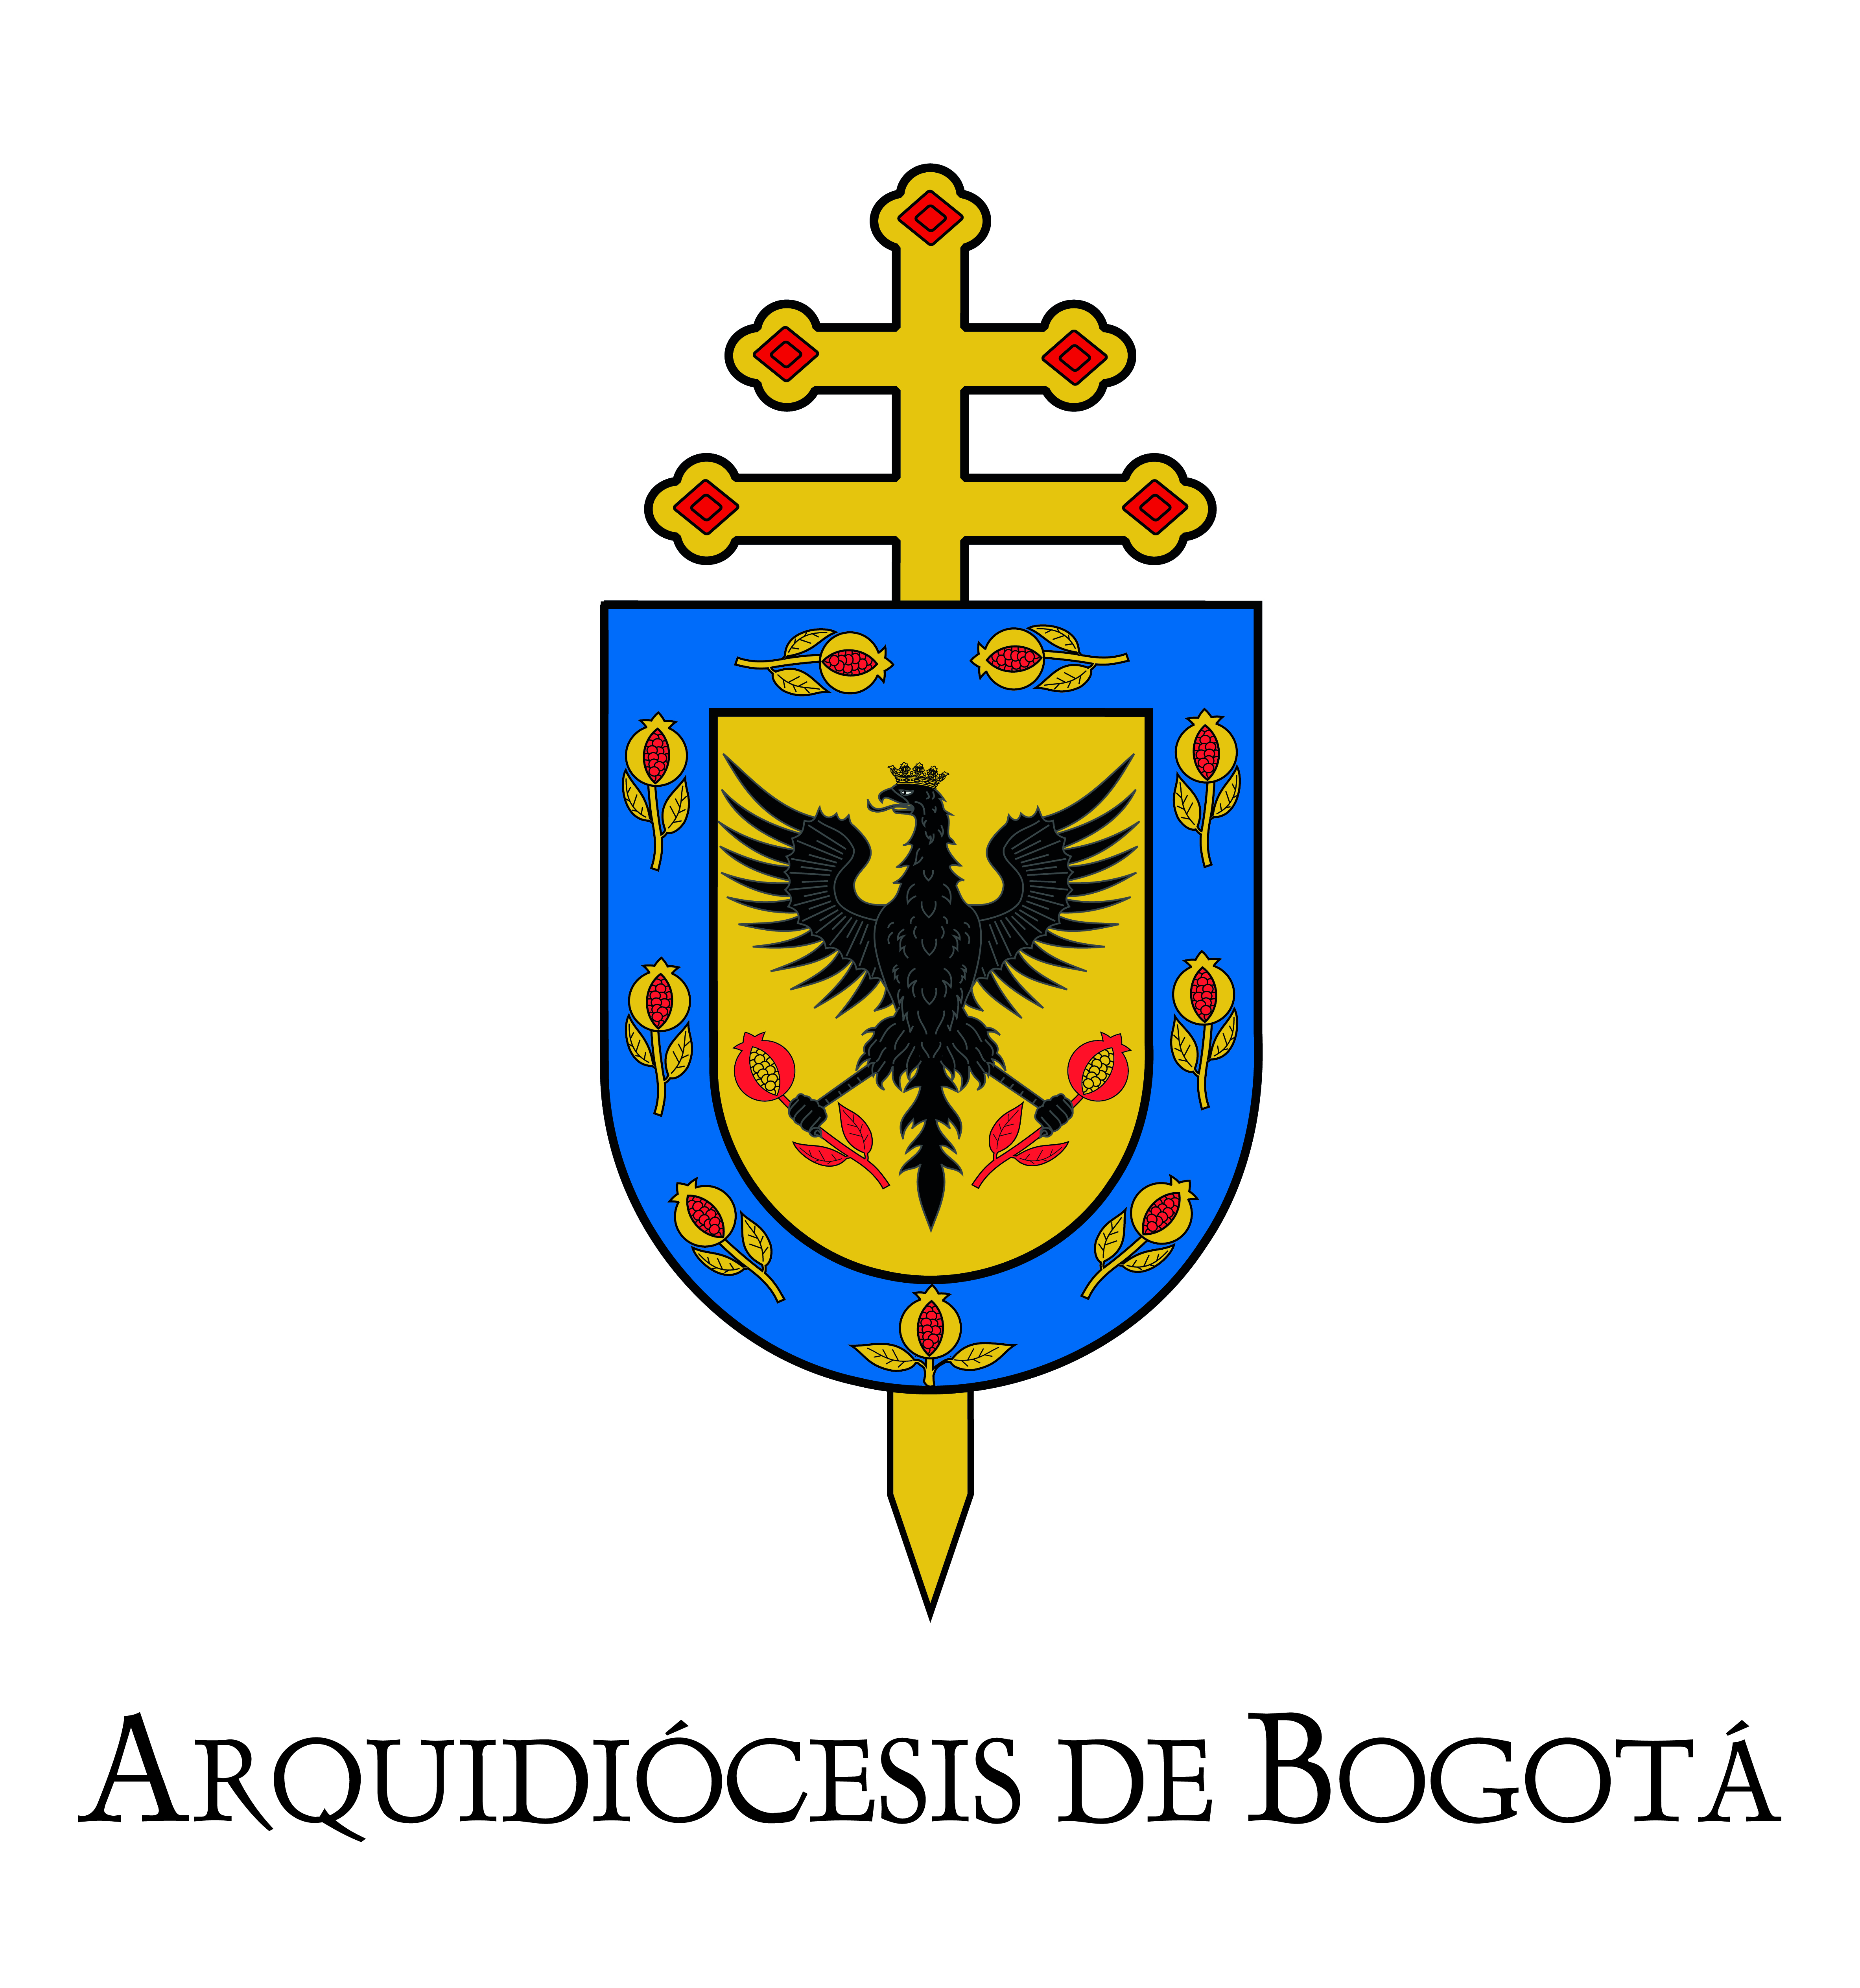 https://arquimedia.s3.amazonaws.com/1/aaa/escudo-arquidiocesis-a-colorjpg.jpg